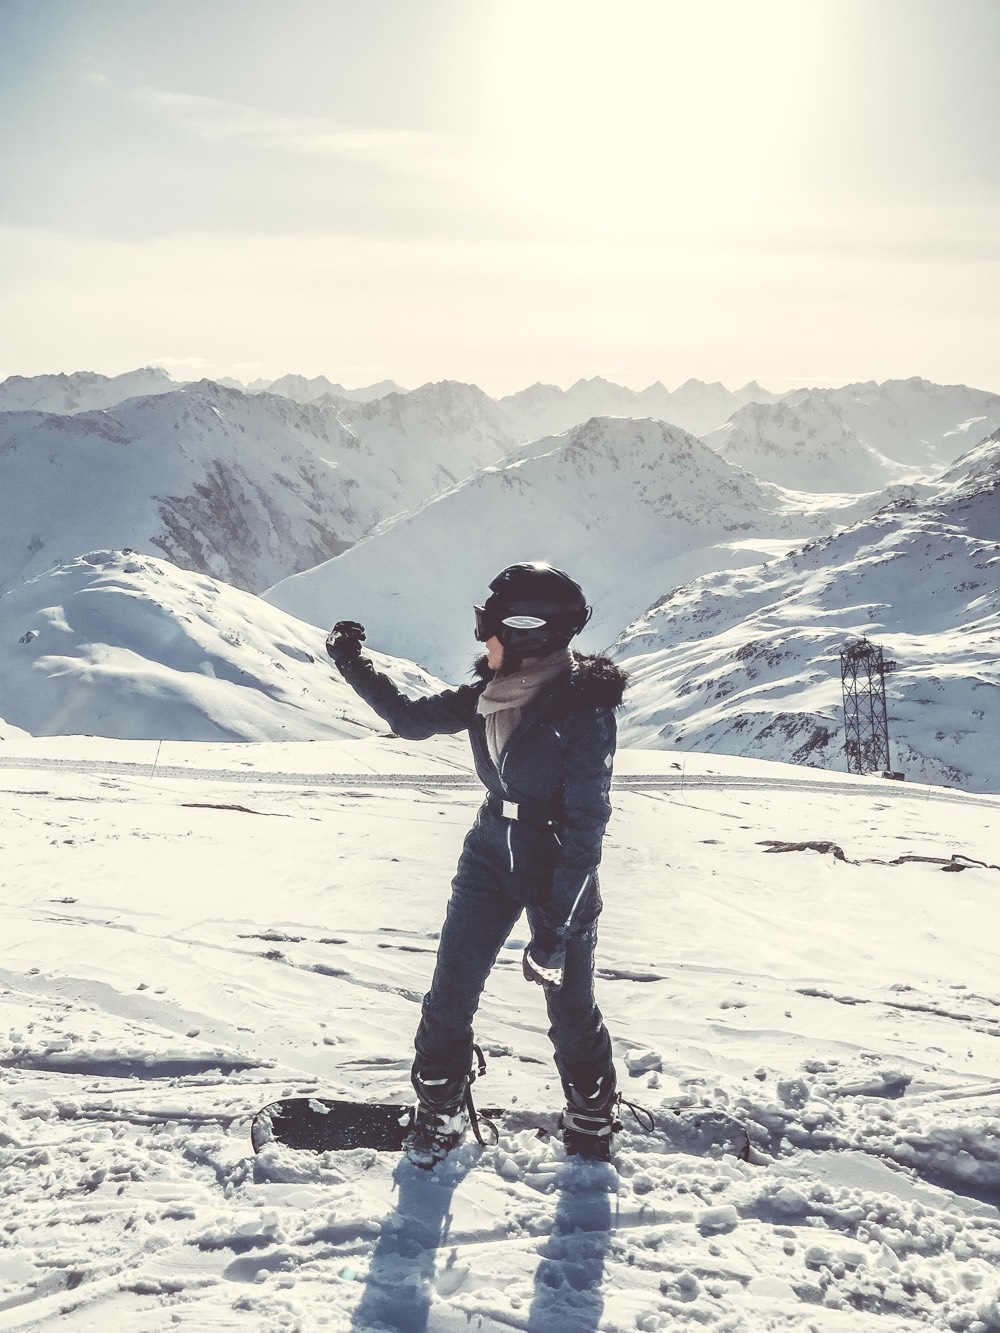 Skiing in switzerland, swiss alps, winter sport, andermatt mountain guide for snowboarders